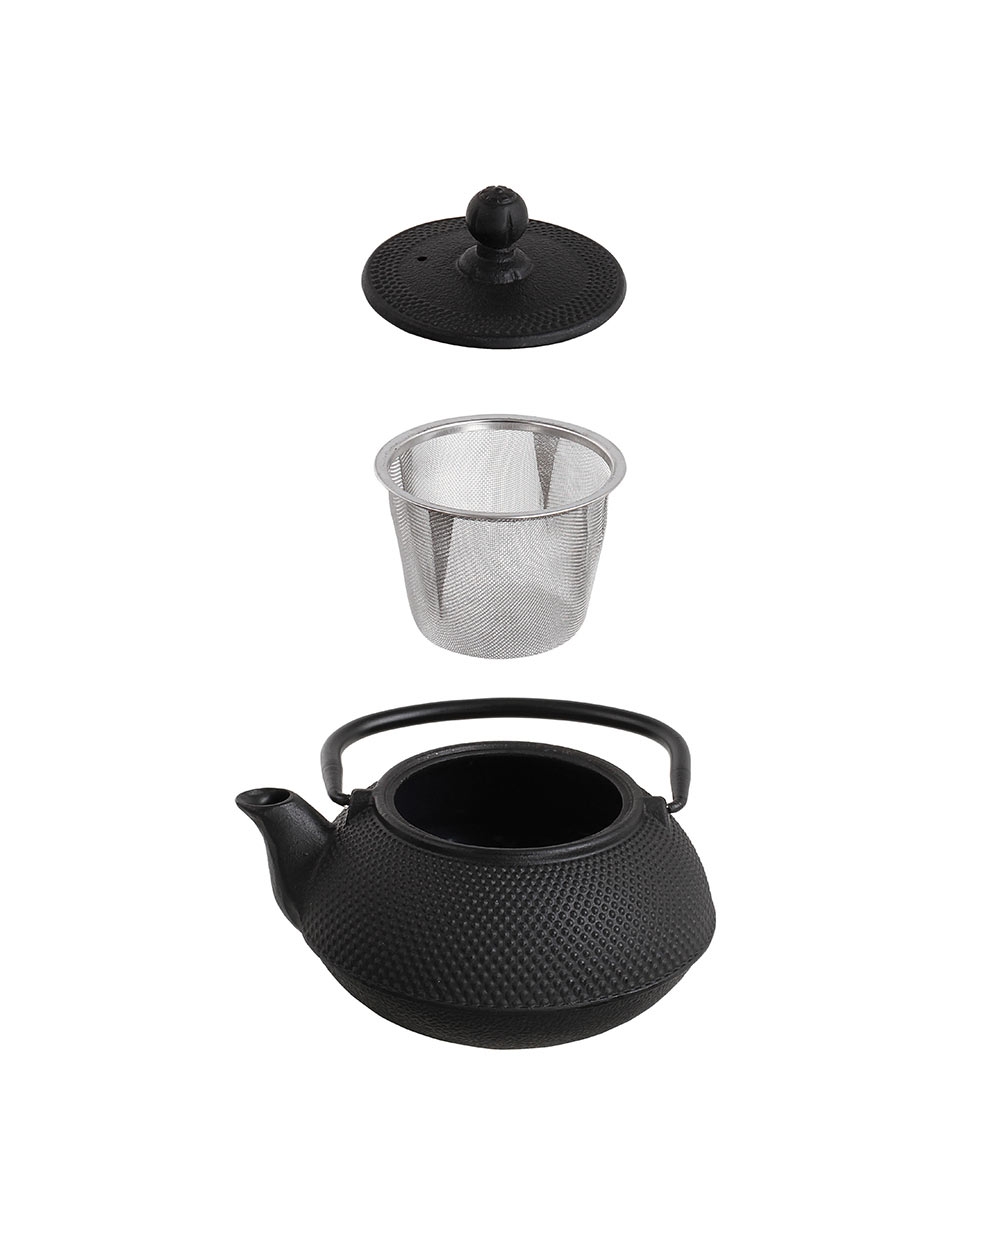 Arare cast iron teapot 550 ml